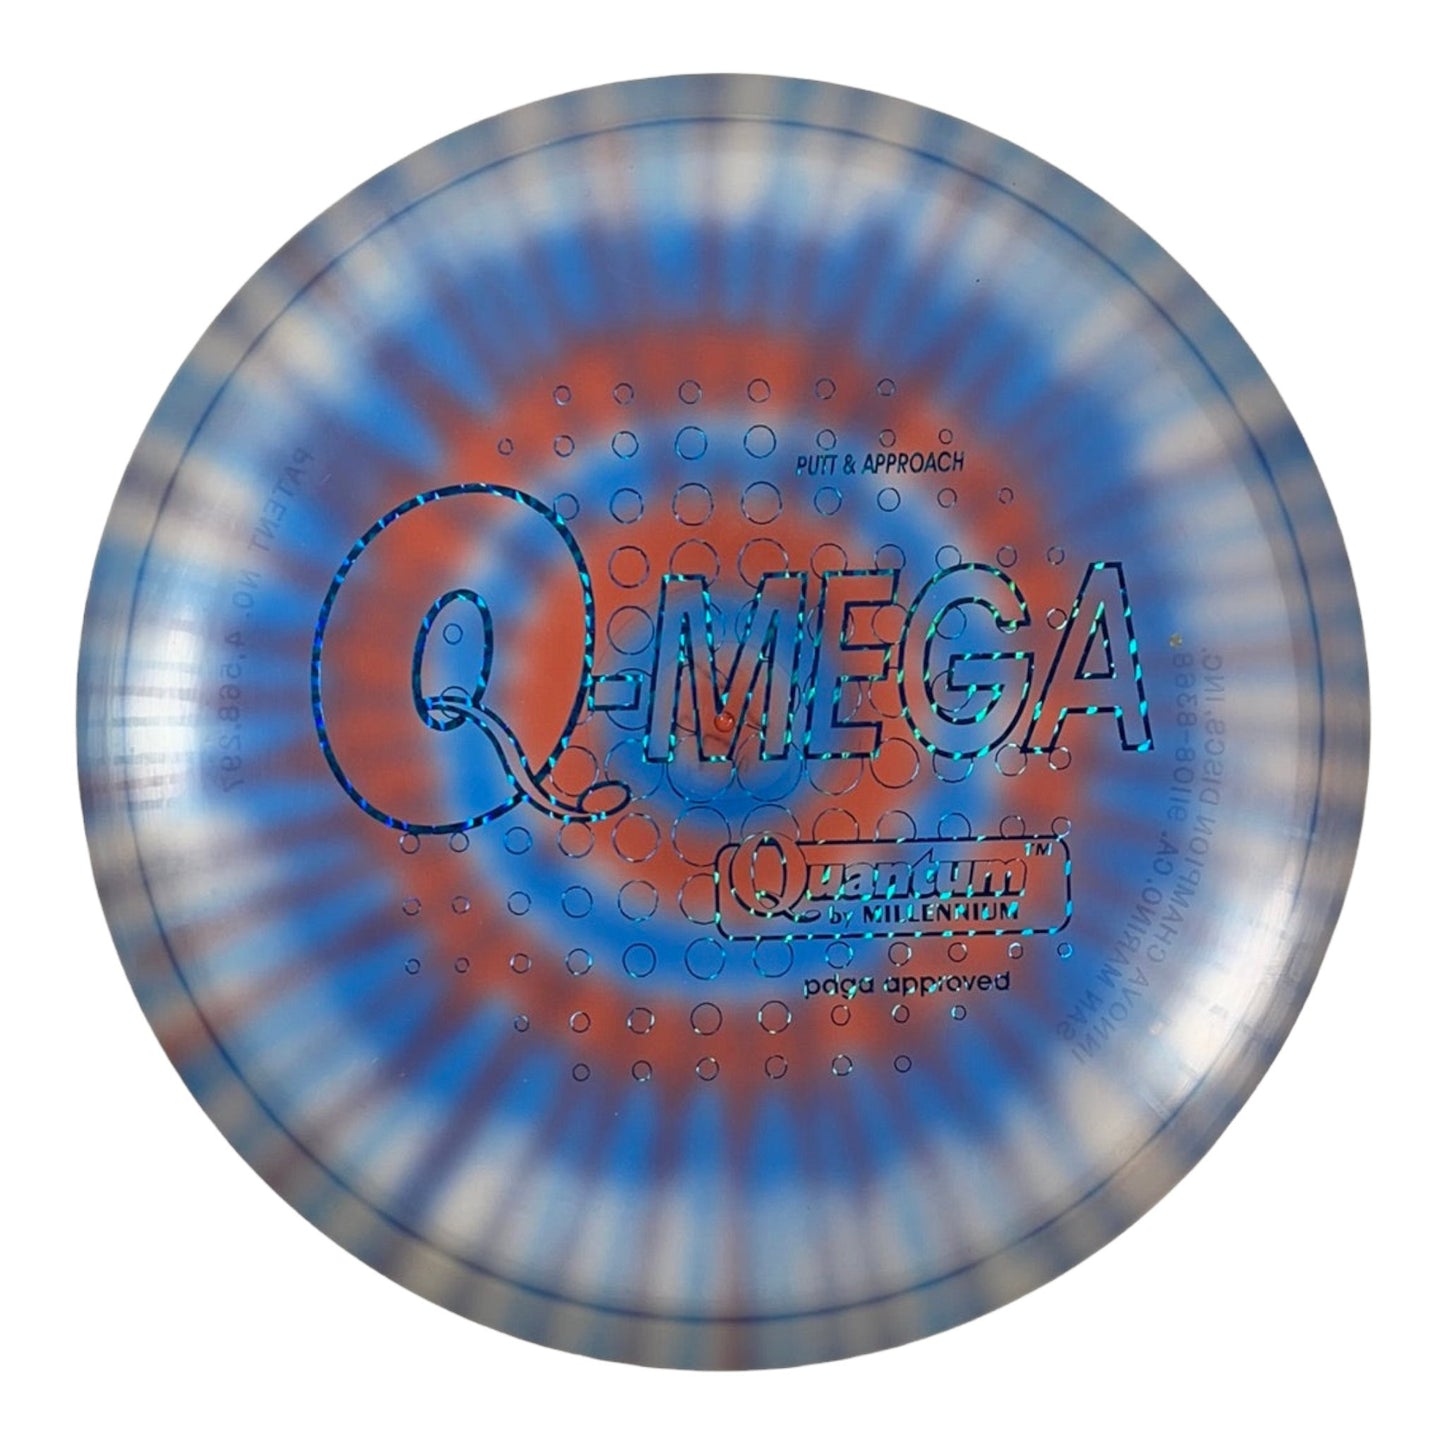 Millennium Golf Discs Omega | Quantum | Blue/Dyed 171g Disc Golf